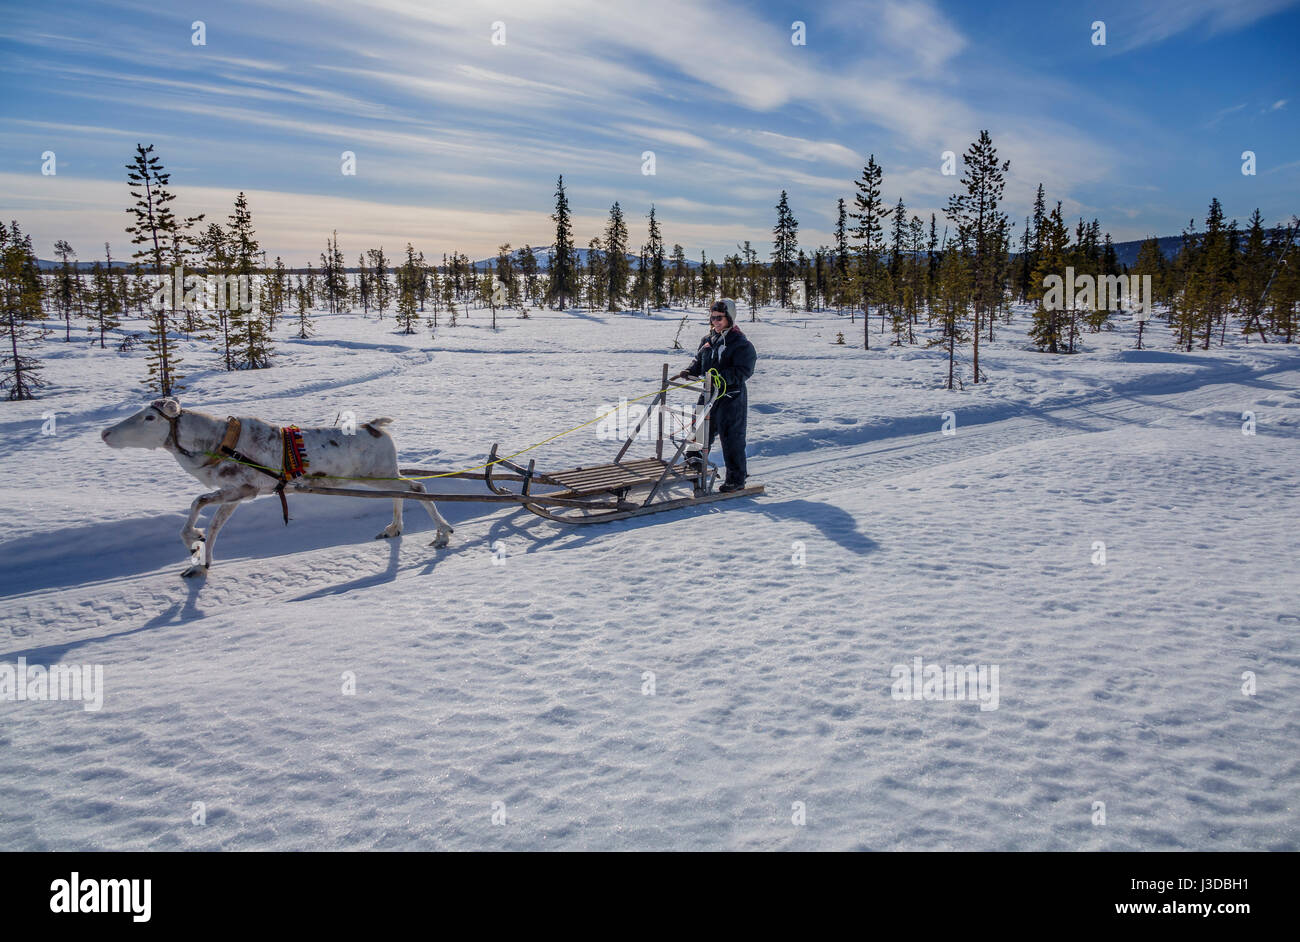 Reindeer   Sledding, Swedish Lapland, Sweden Stock Photo